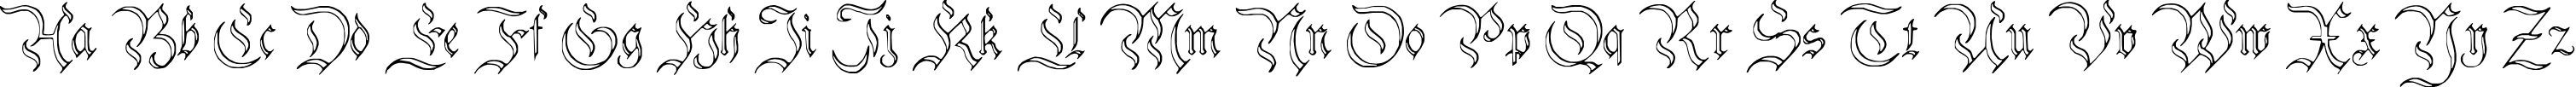 Пример написания английского алфавита шрифтом Charterwell No3